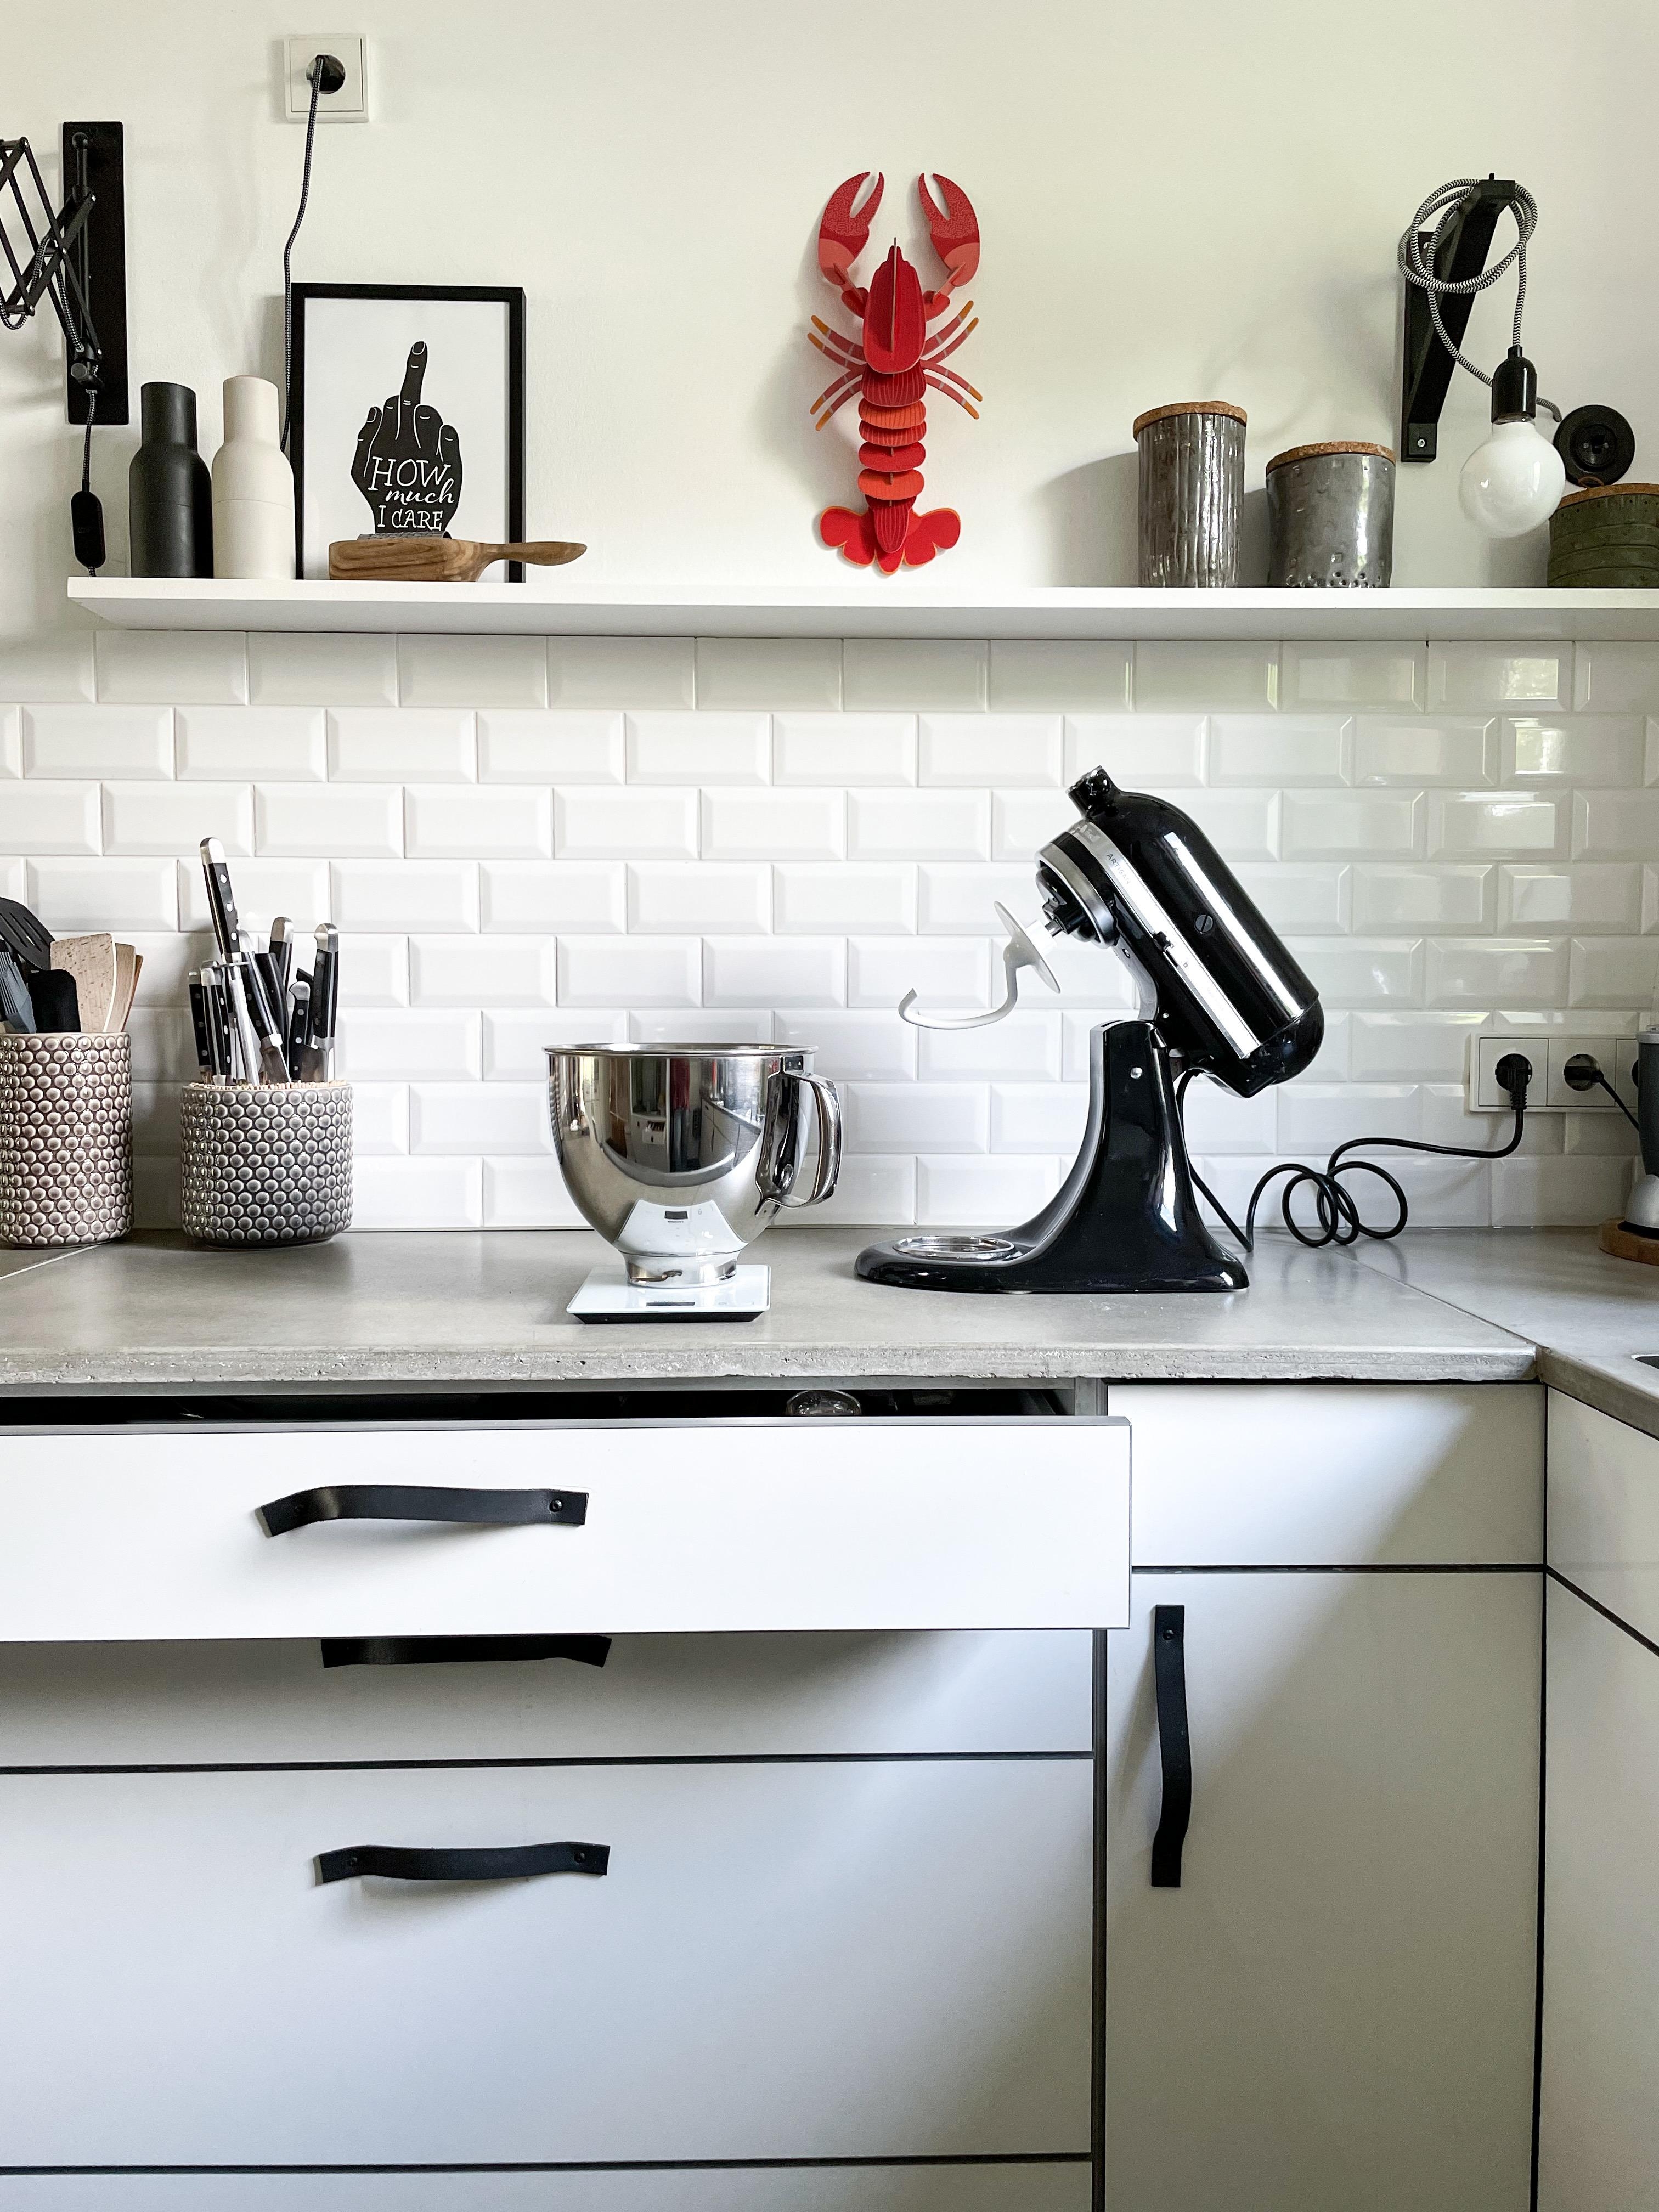 Lieber den Hummer an der Wand, als im Topf!

#Küche #Küchenaccessoires #KitchenAid #studioRoof #Metrofliesen